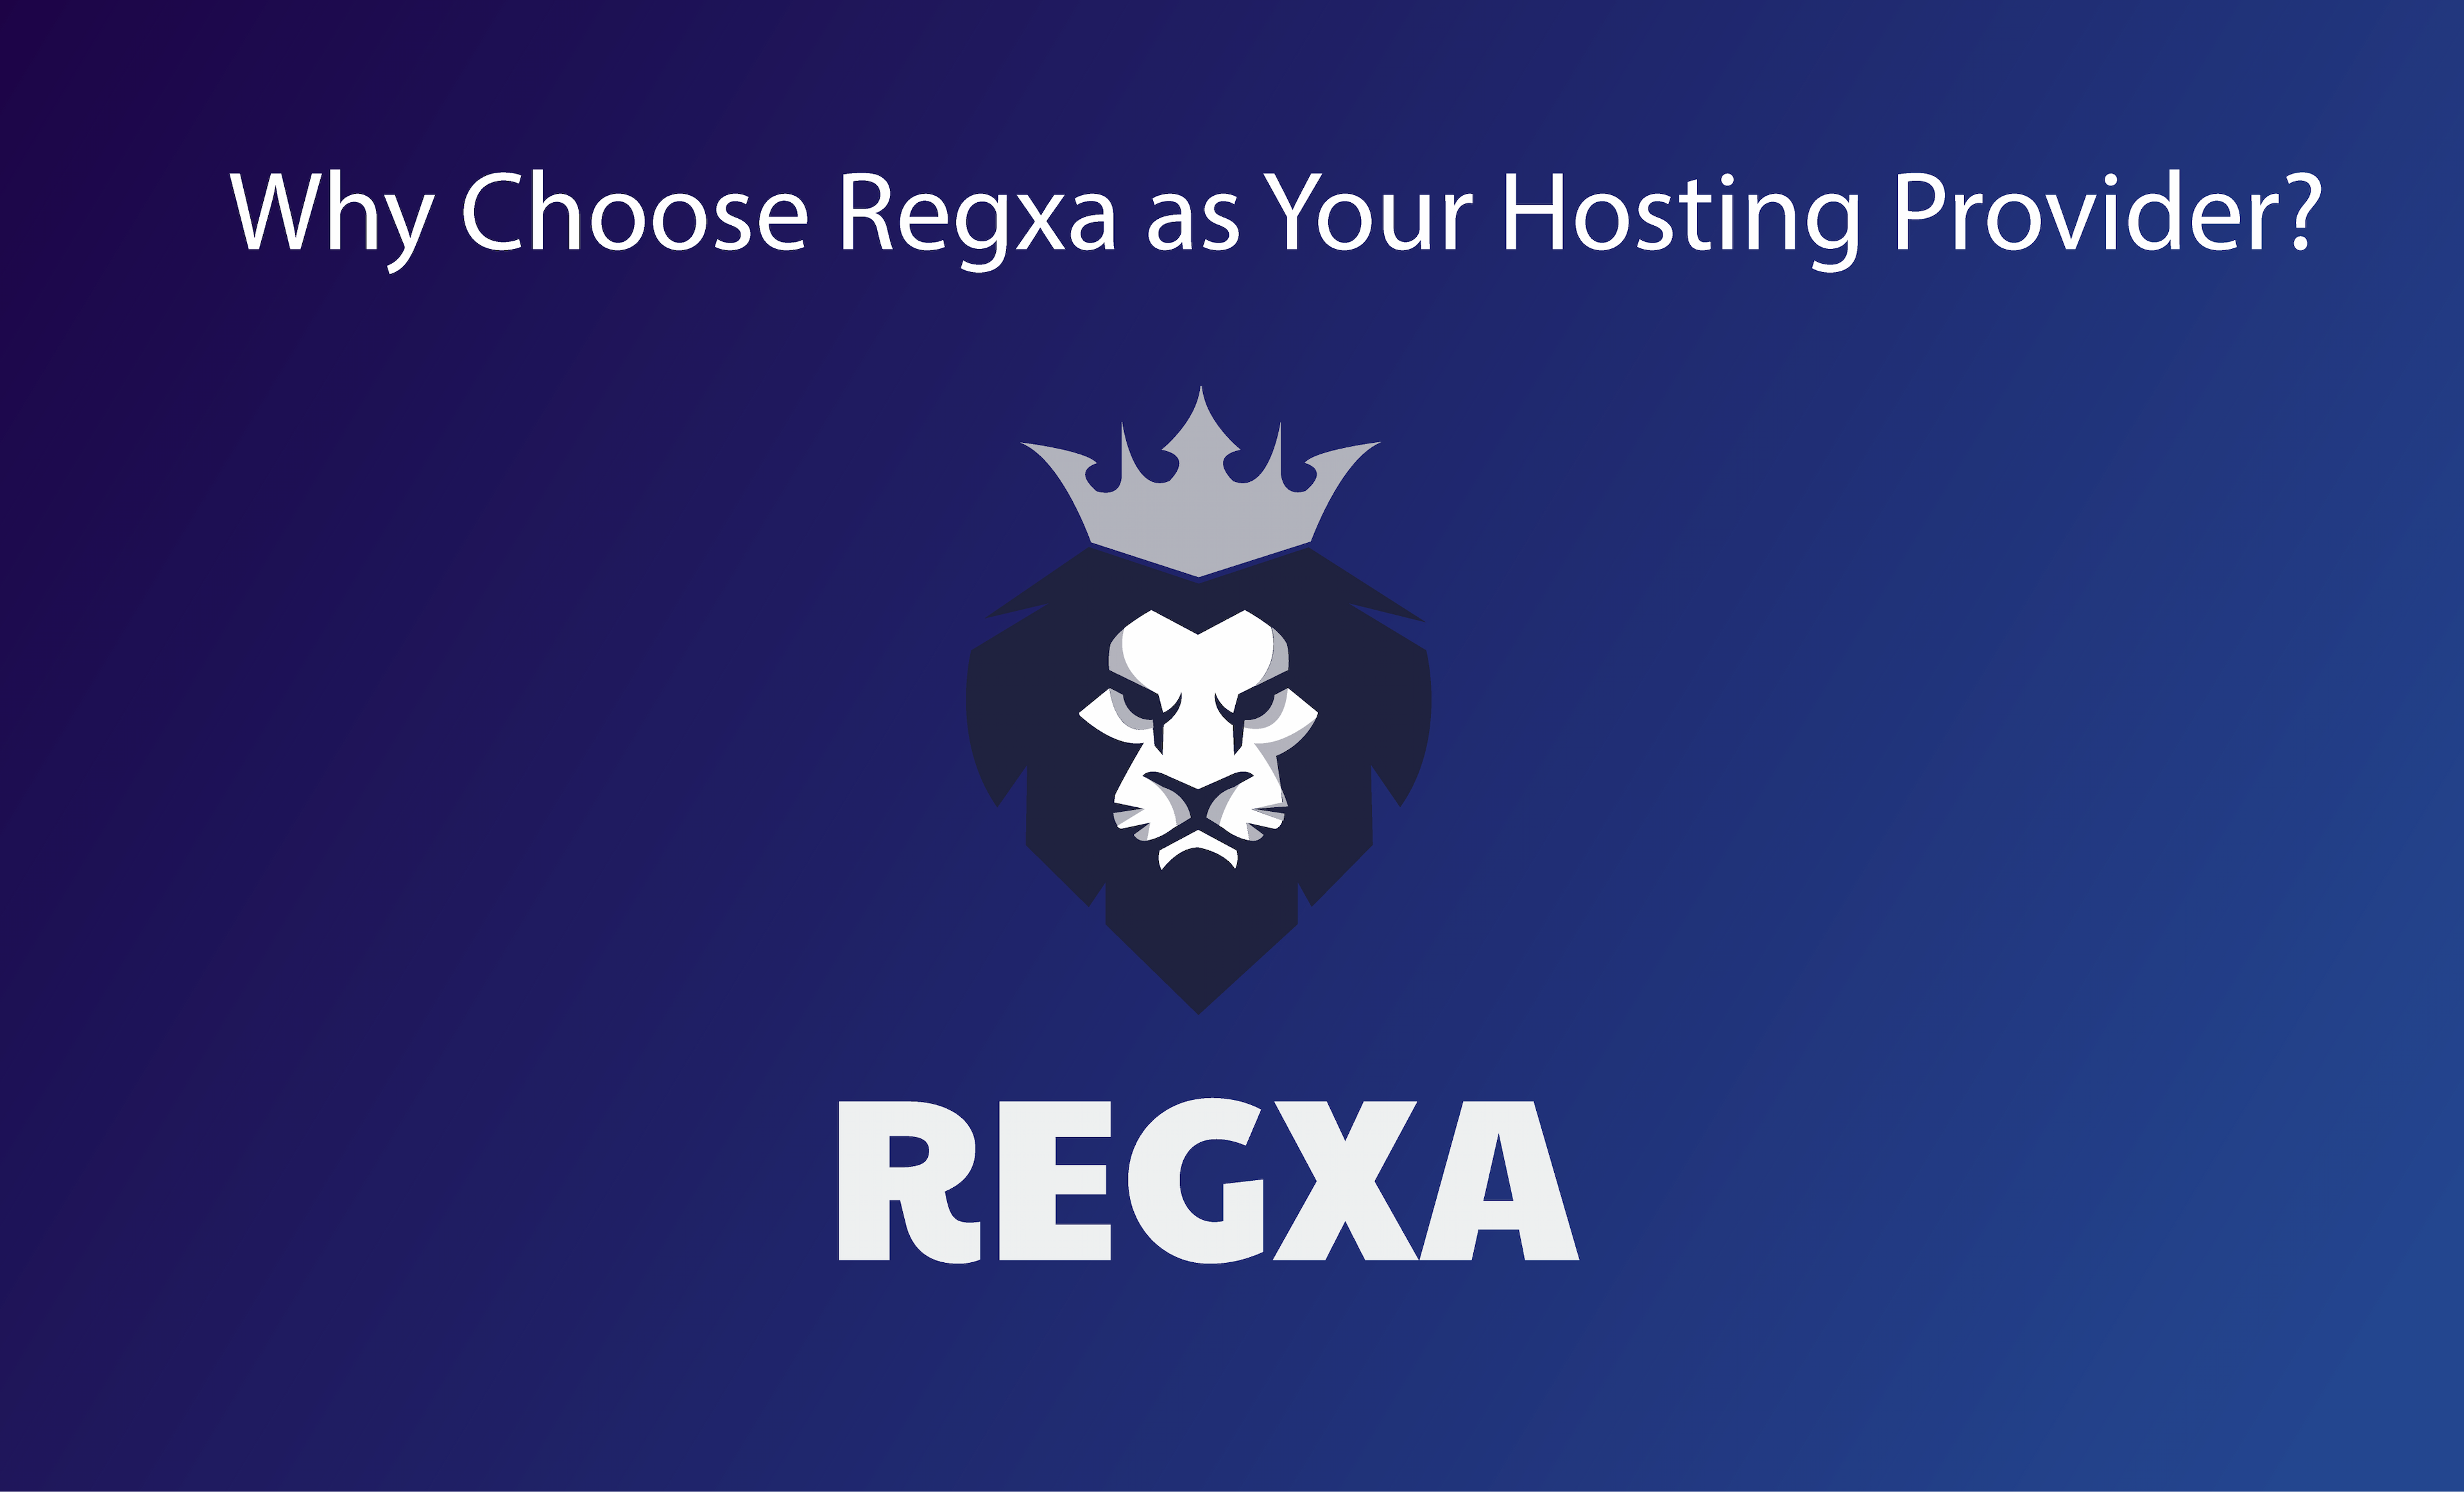 Why Choose Regxa as Your Hosting Provider?